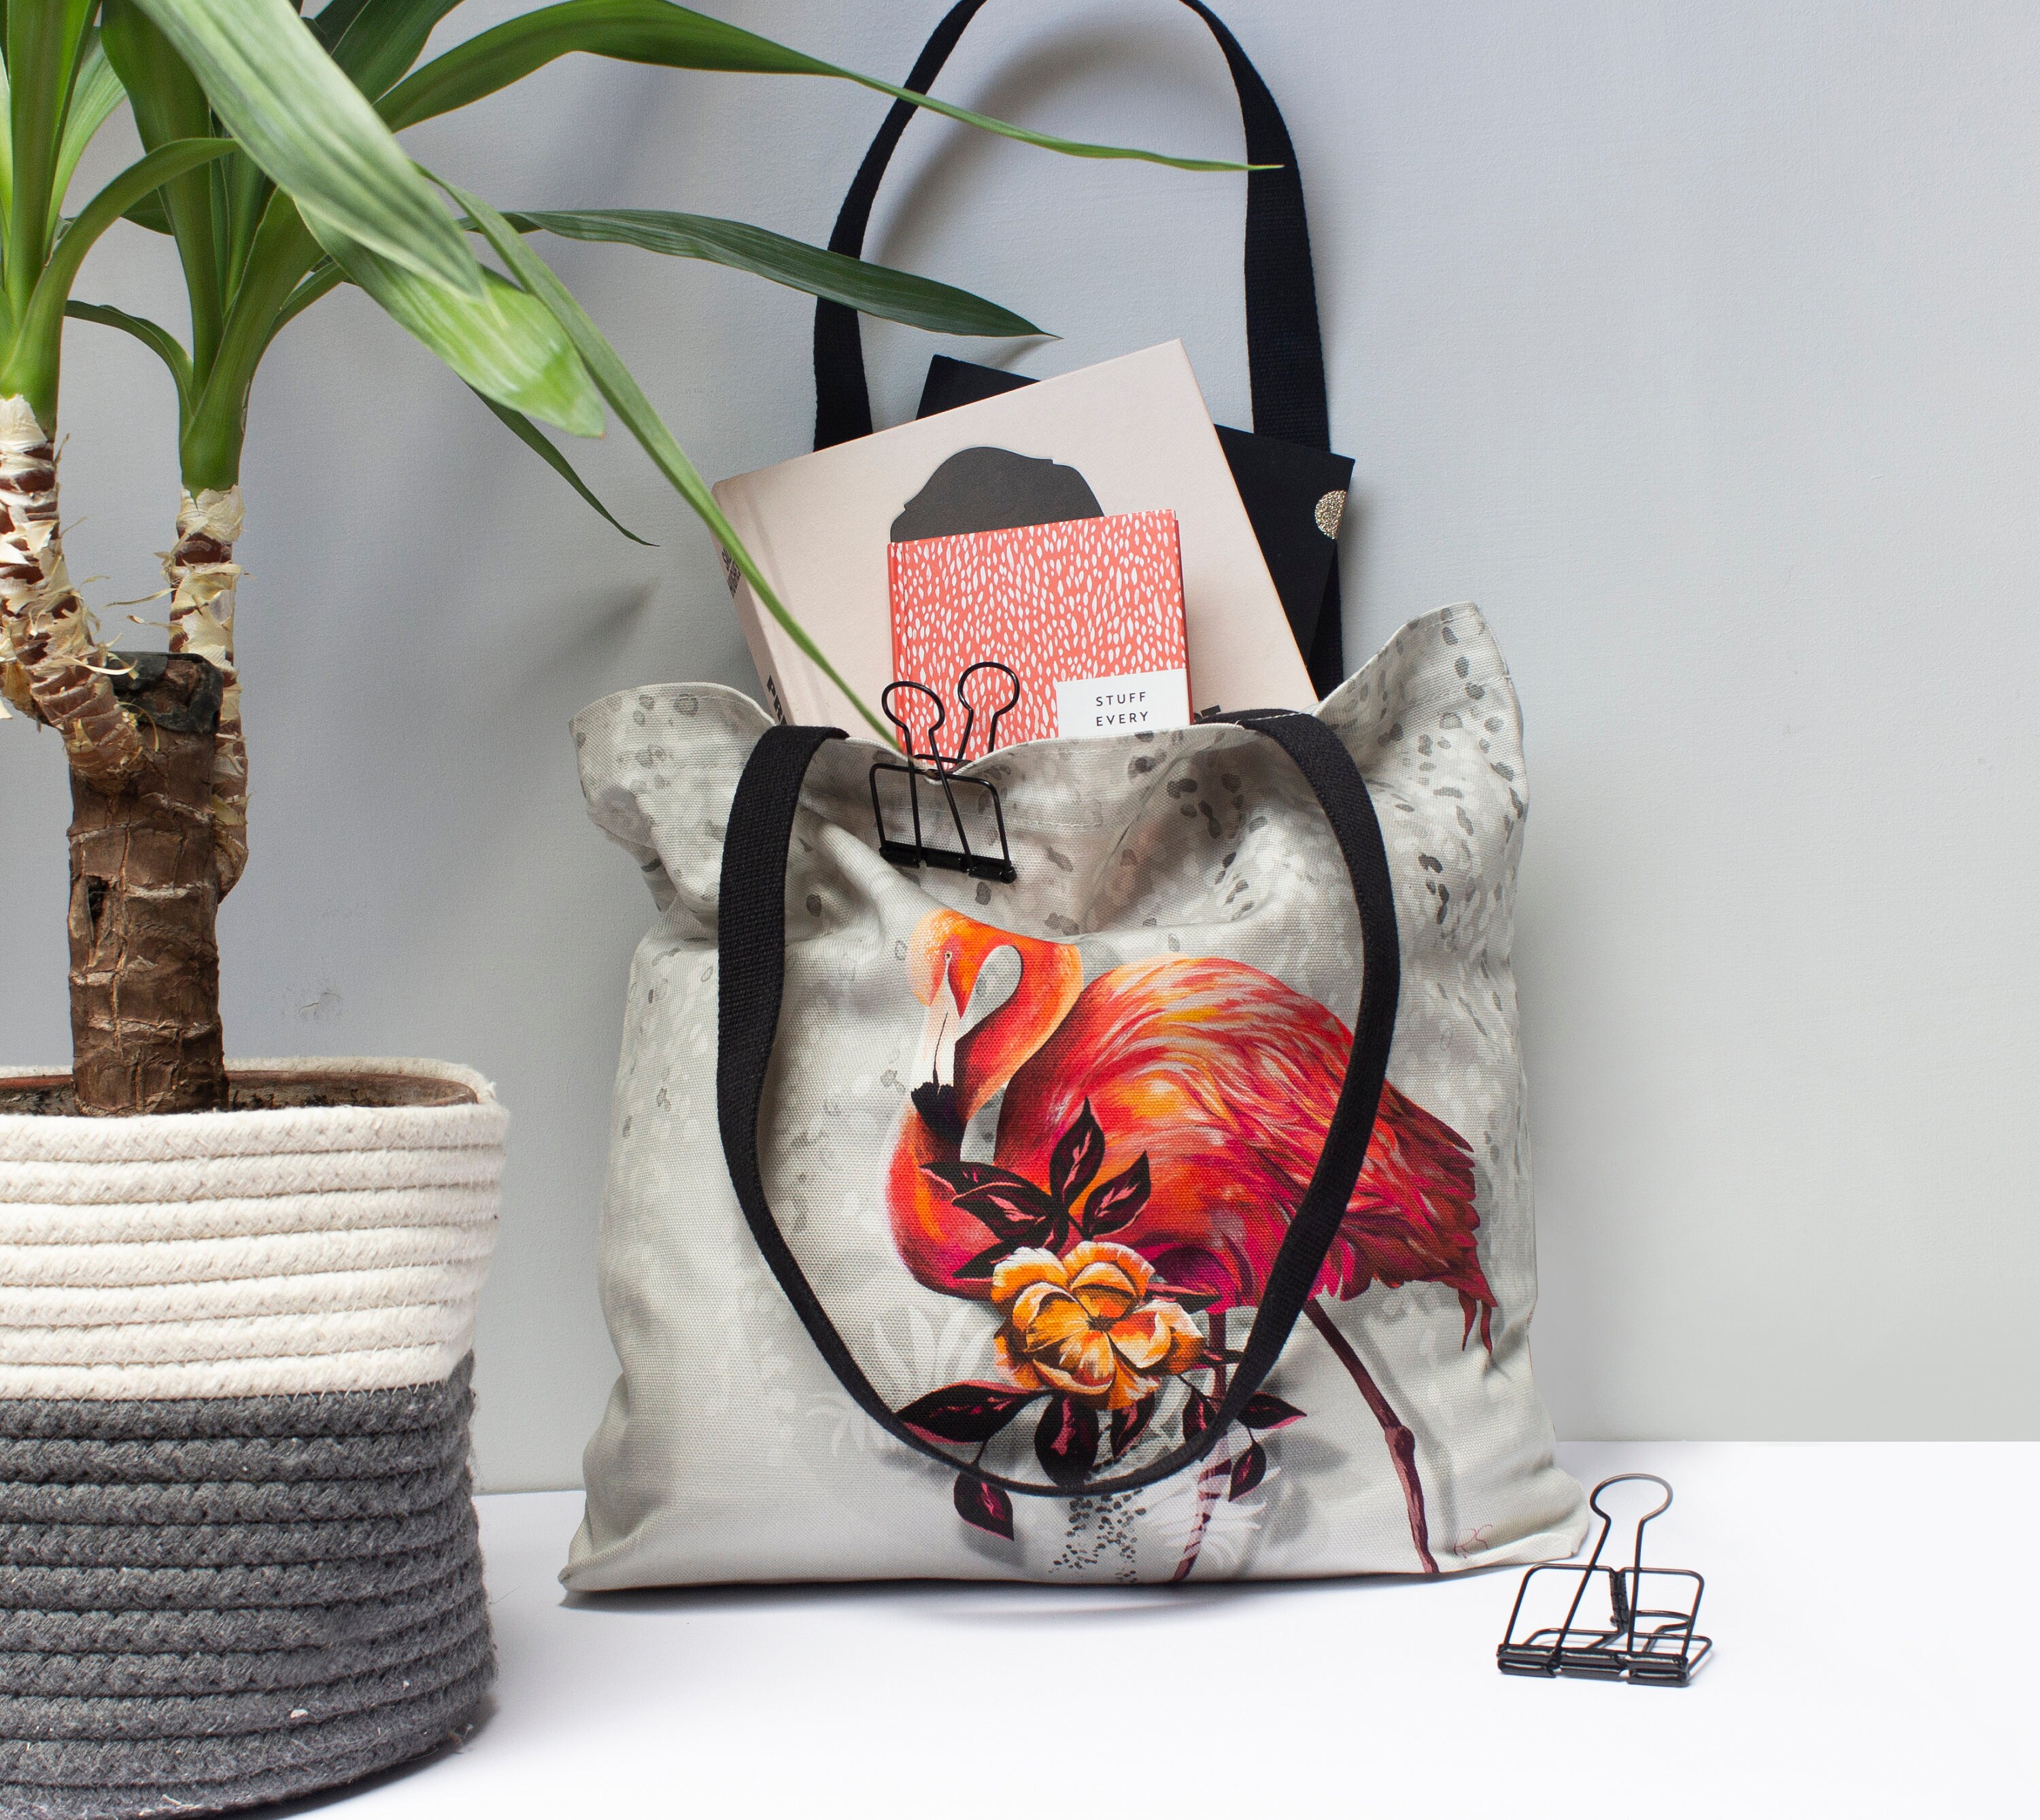 Pink Beach Bag, Beach Aesthetic - Kirabella Design